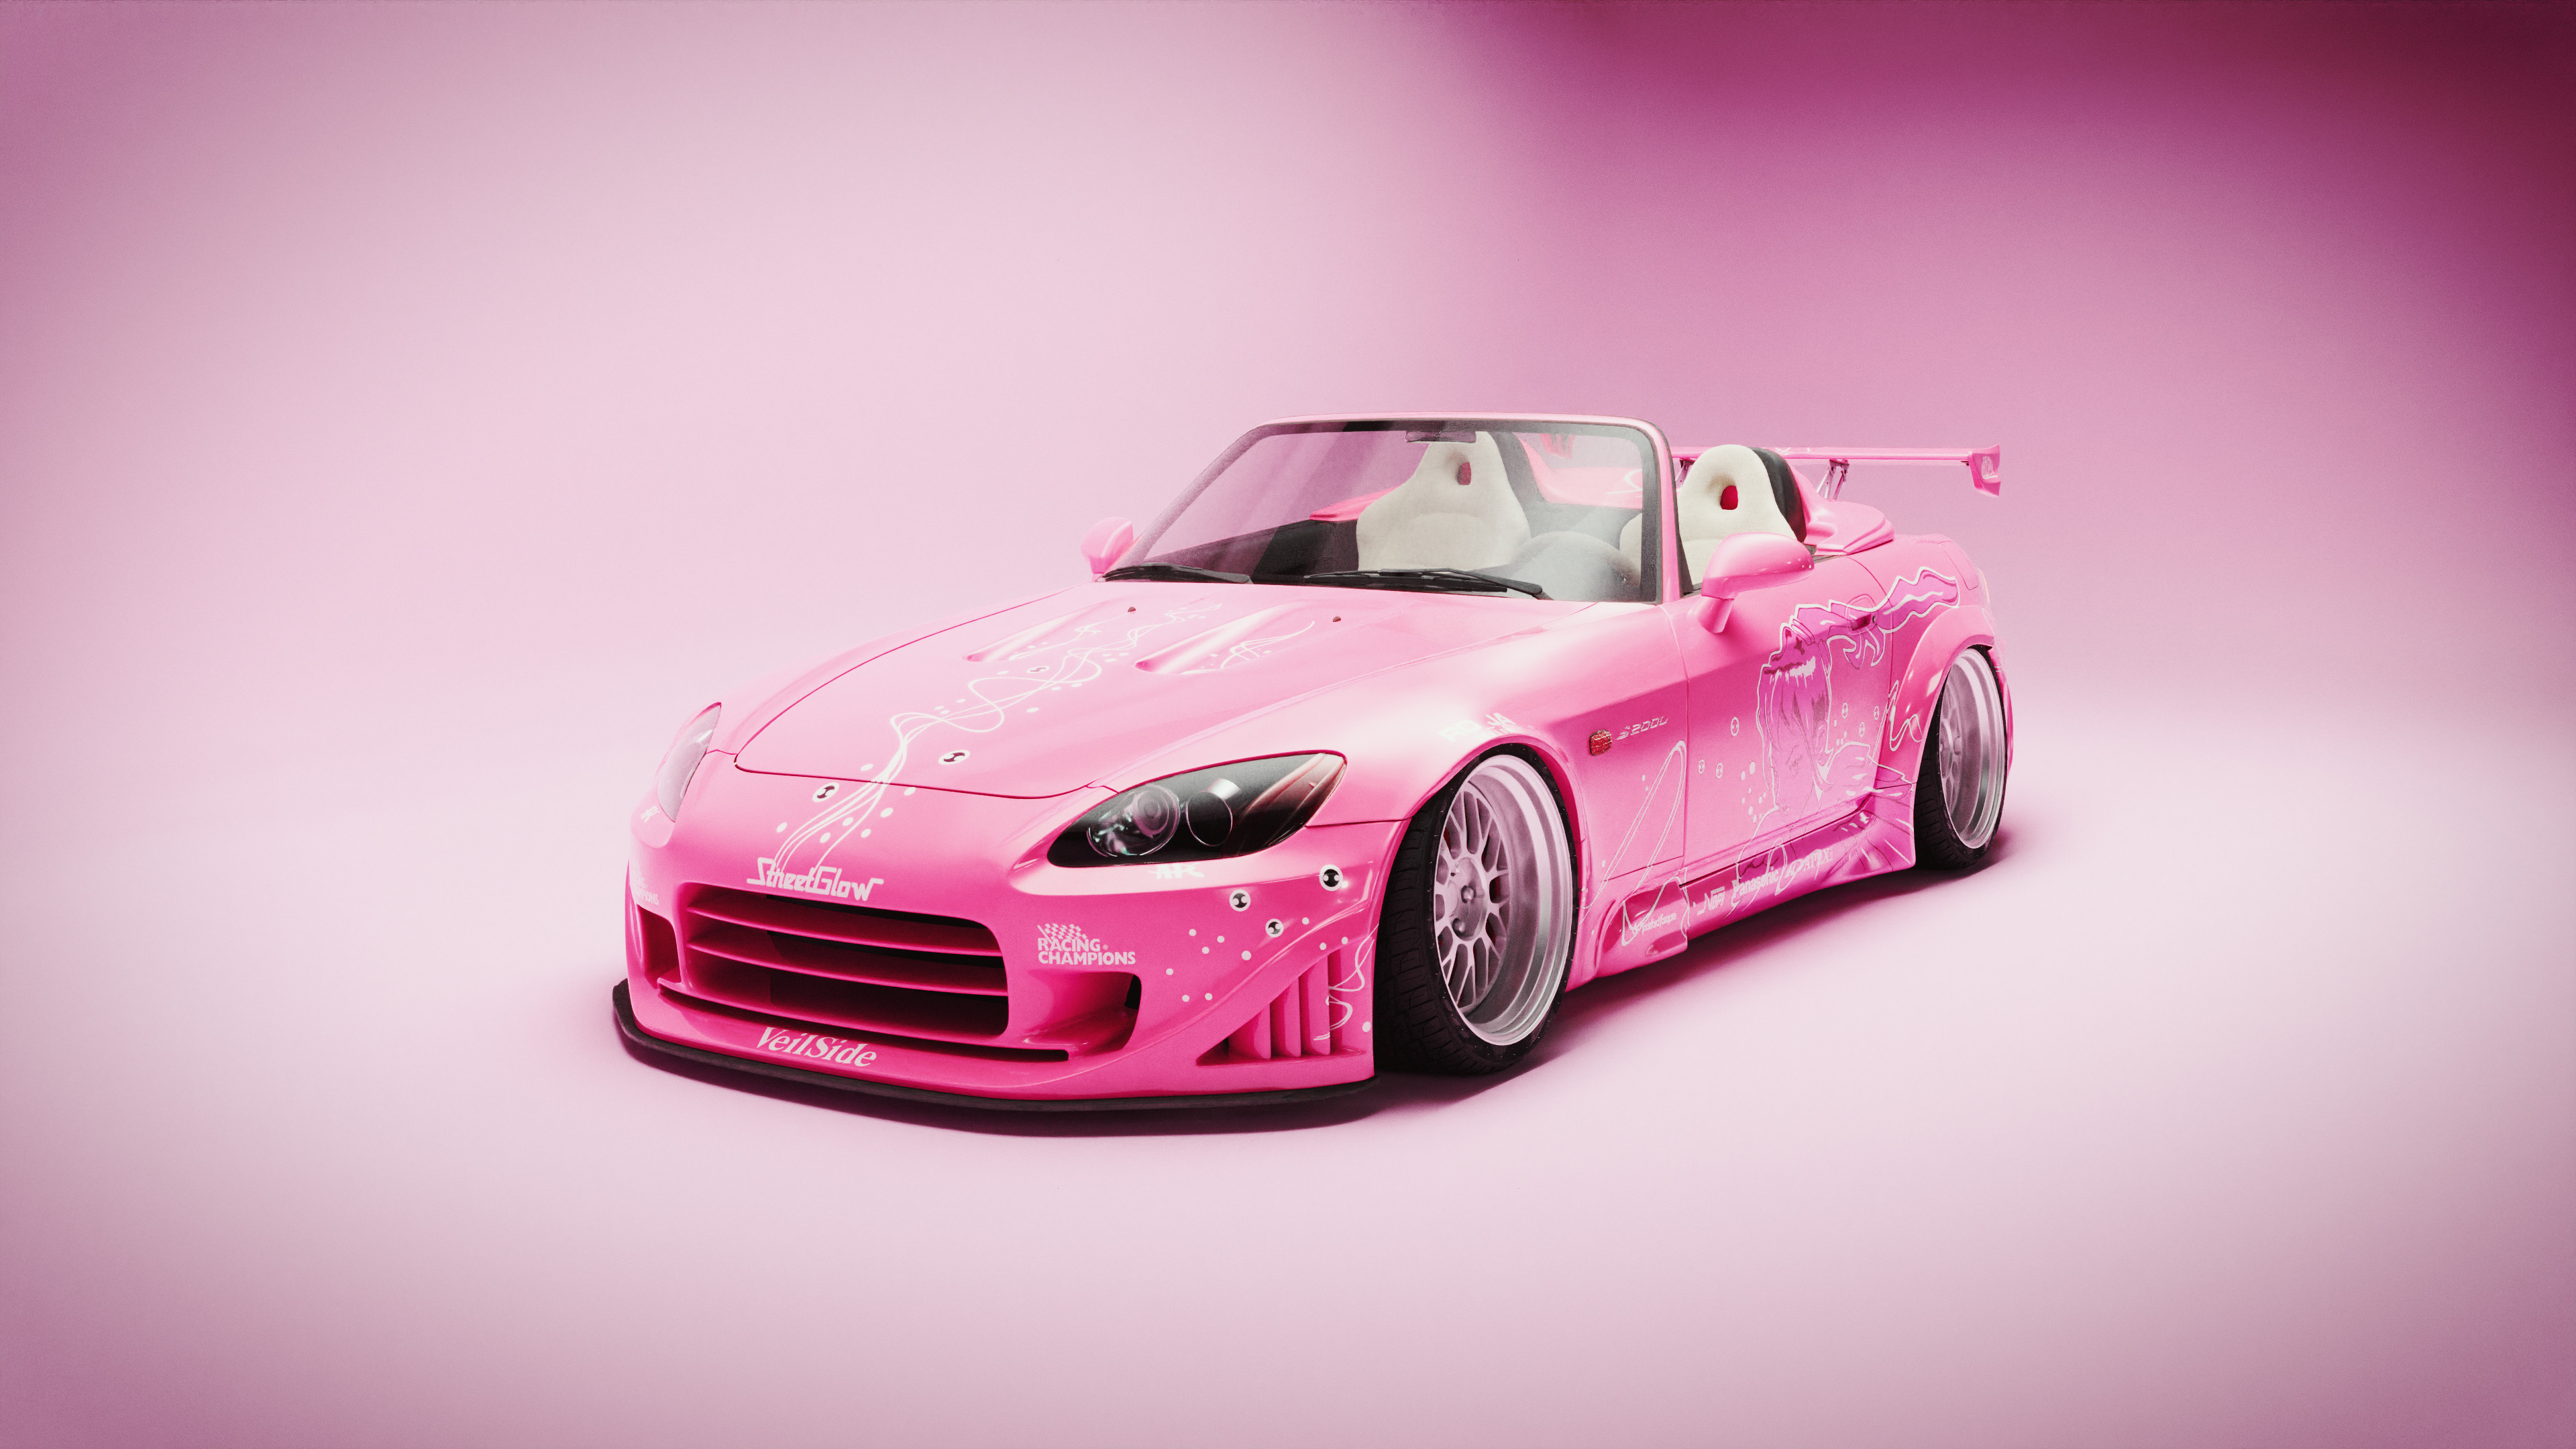 General 3840x2160 SWIZ CGI digital art artwork vehicle car pink cars cabriolet 2 Fast 2 Furious studio Japanese cars simple background anime girls frontal view